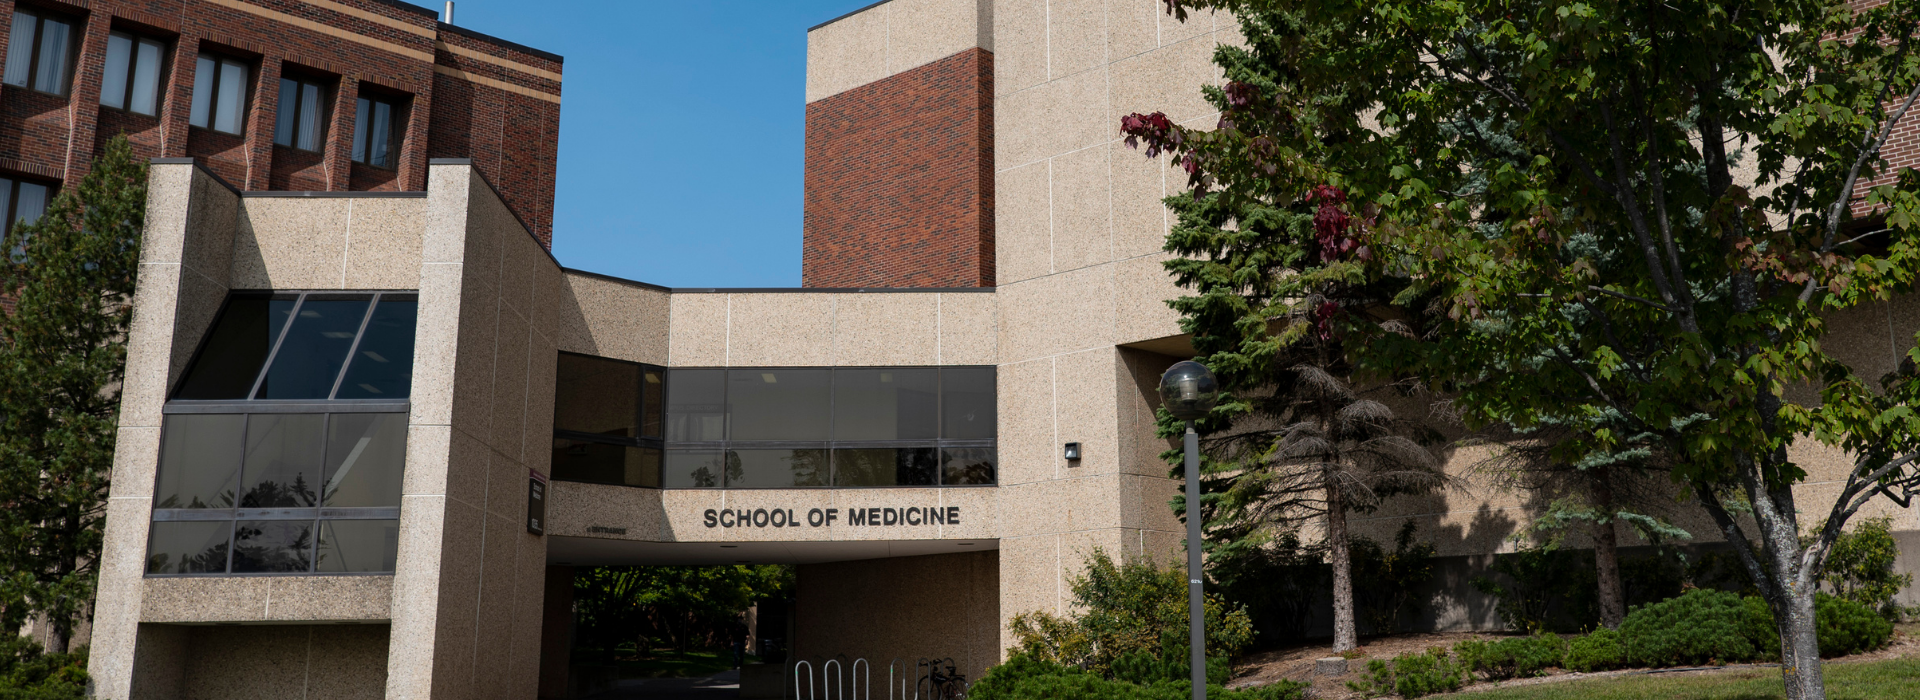 U of M Medical School Seeks Applicants for Regional Dean to Lead the Duluth Campus